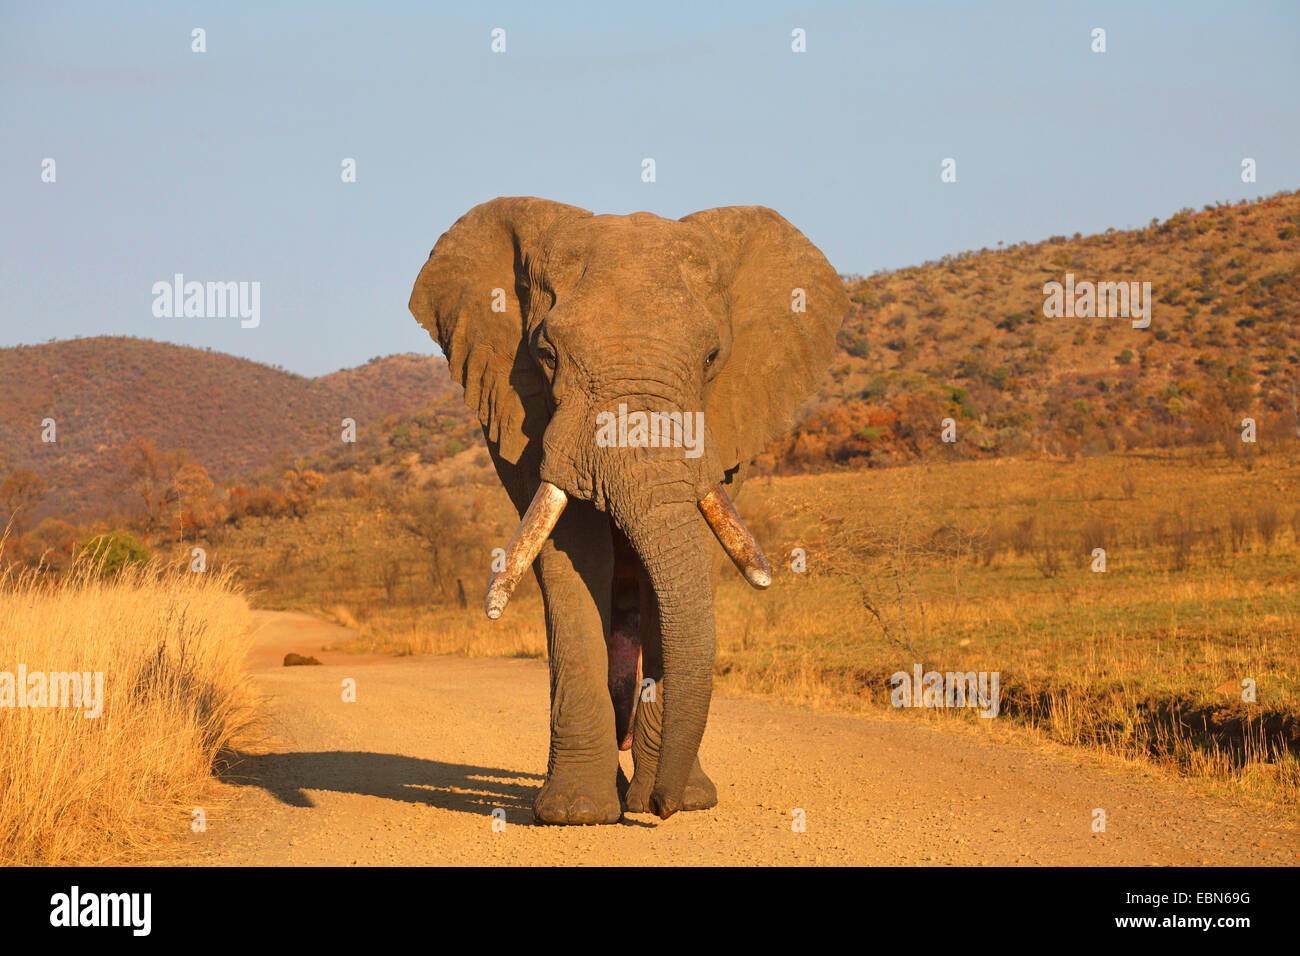 Afrikanischer Elefant (Loxodonta Africana), Elefant Walkingon eine unbefestigte Straße, Südafrika, Pilanesberg Nationalpark Stockfoto